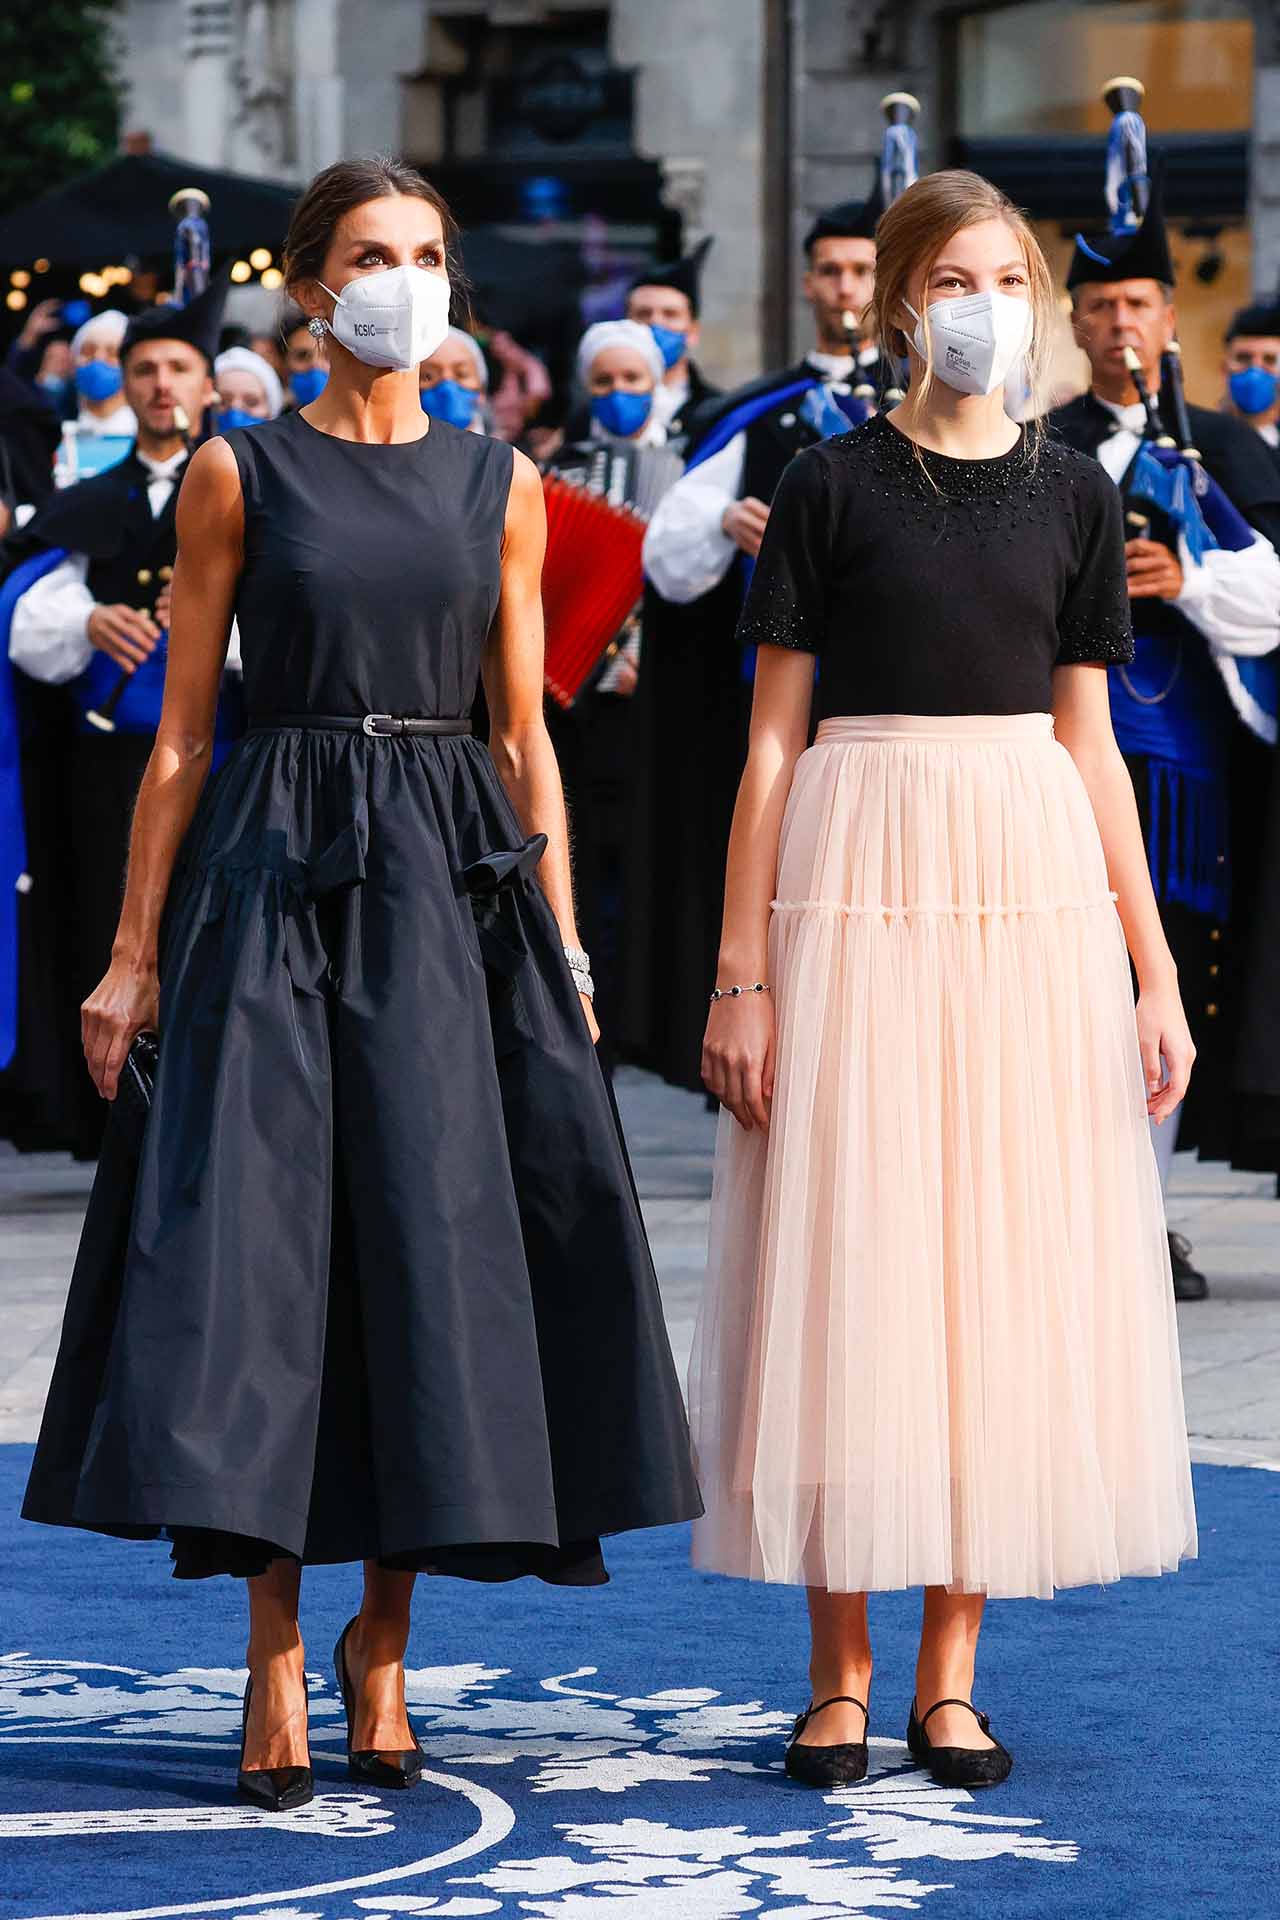 Spanish Queen Letizia Ortiz and Sofia de Borbon during the Princess of Asturias Awards 2021 in Oviedo, on Friday 22 October 2021.